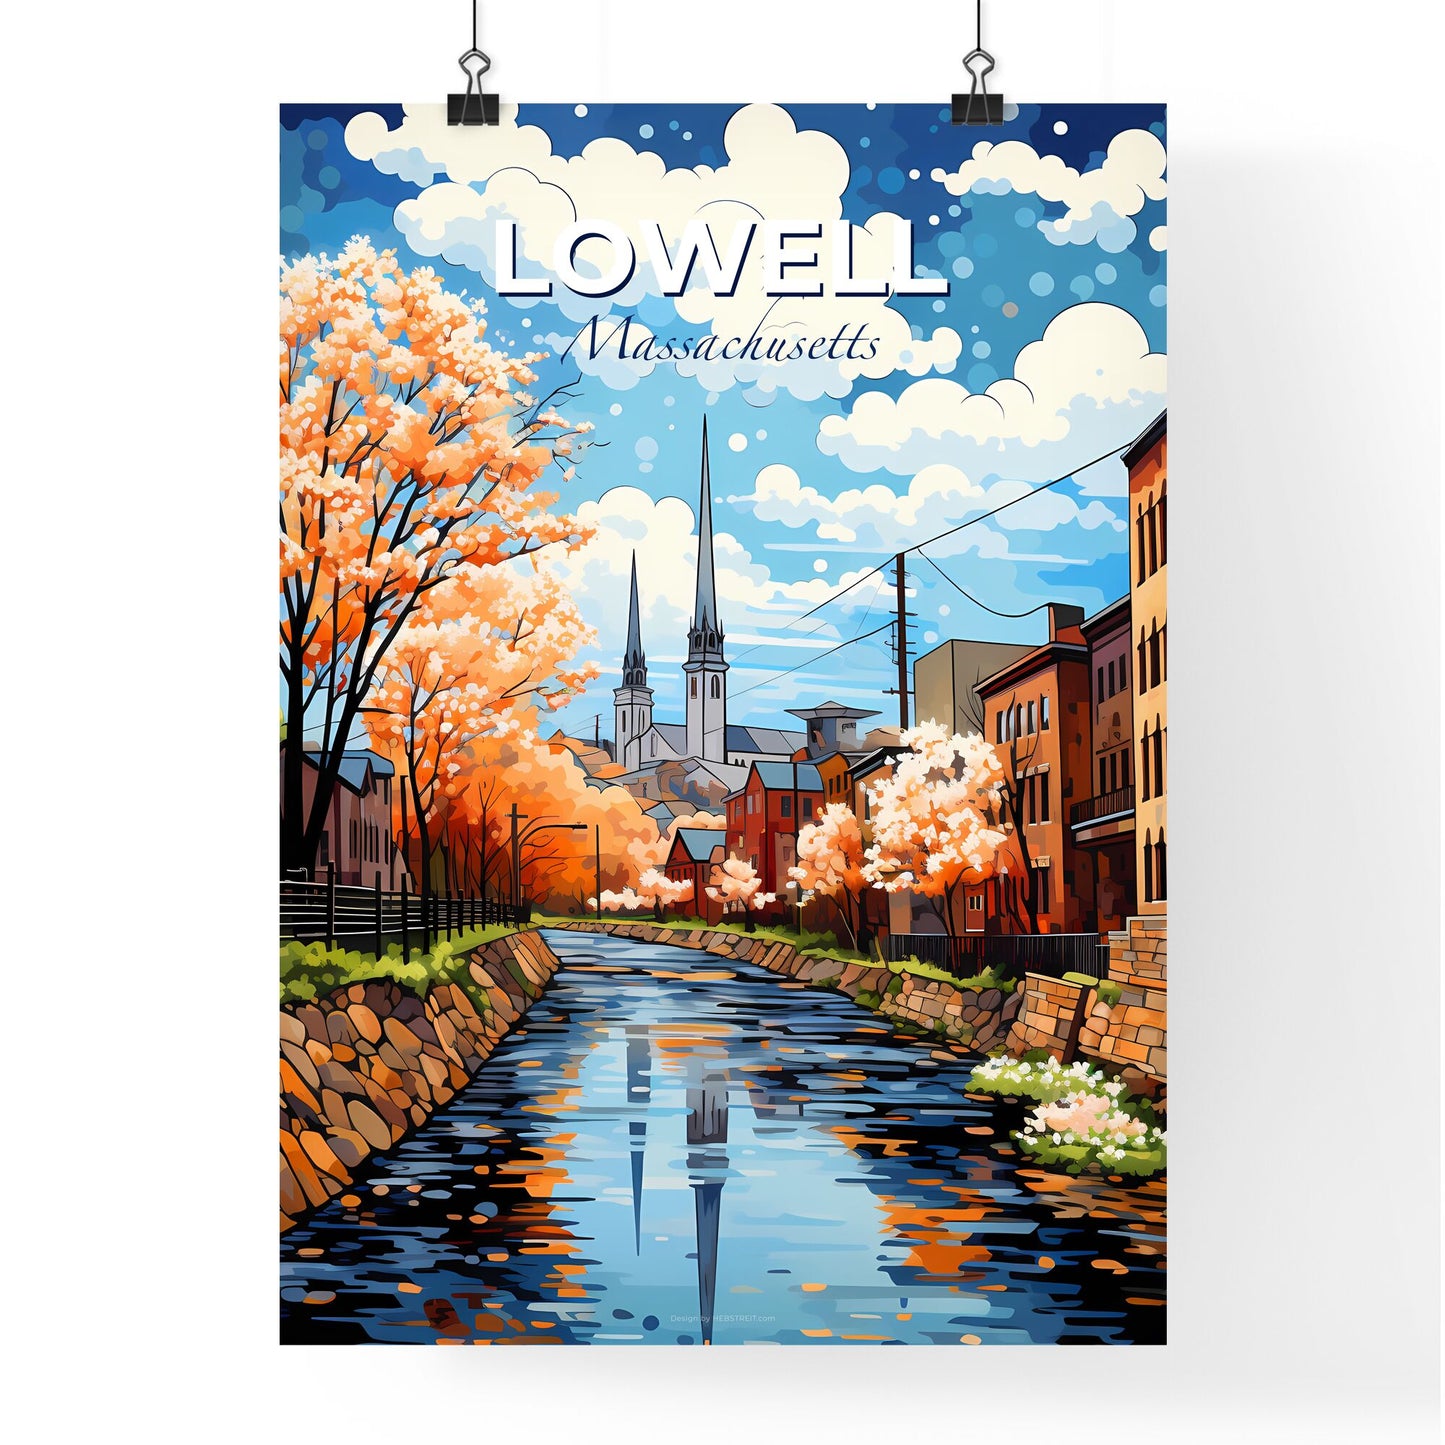 Lowell, Massachusetts, A Poster of a river running through a city Default Title